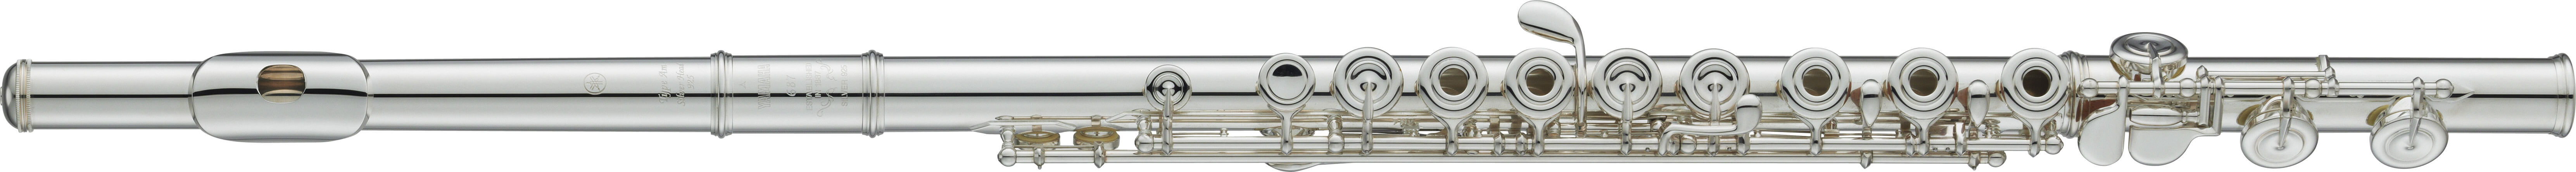 Flauta Travesera Yamaha YFL-687